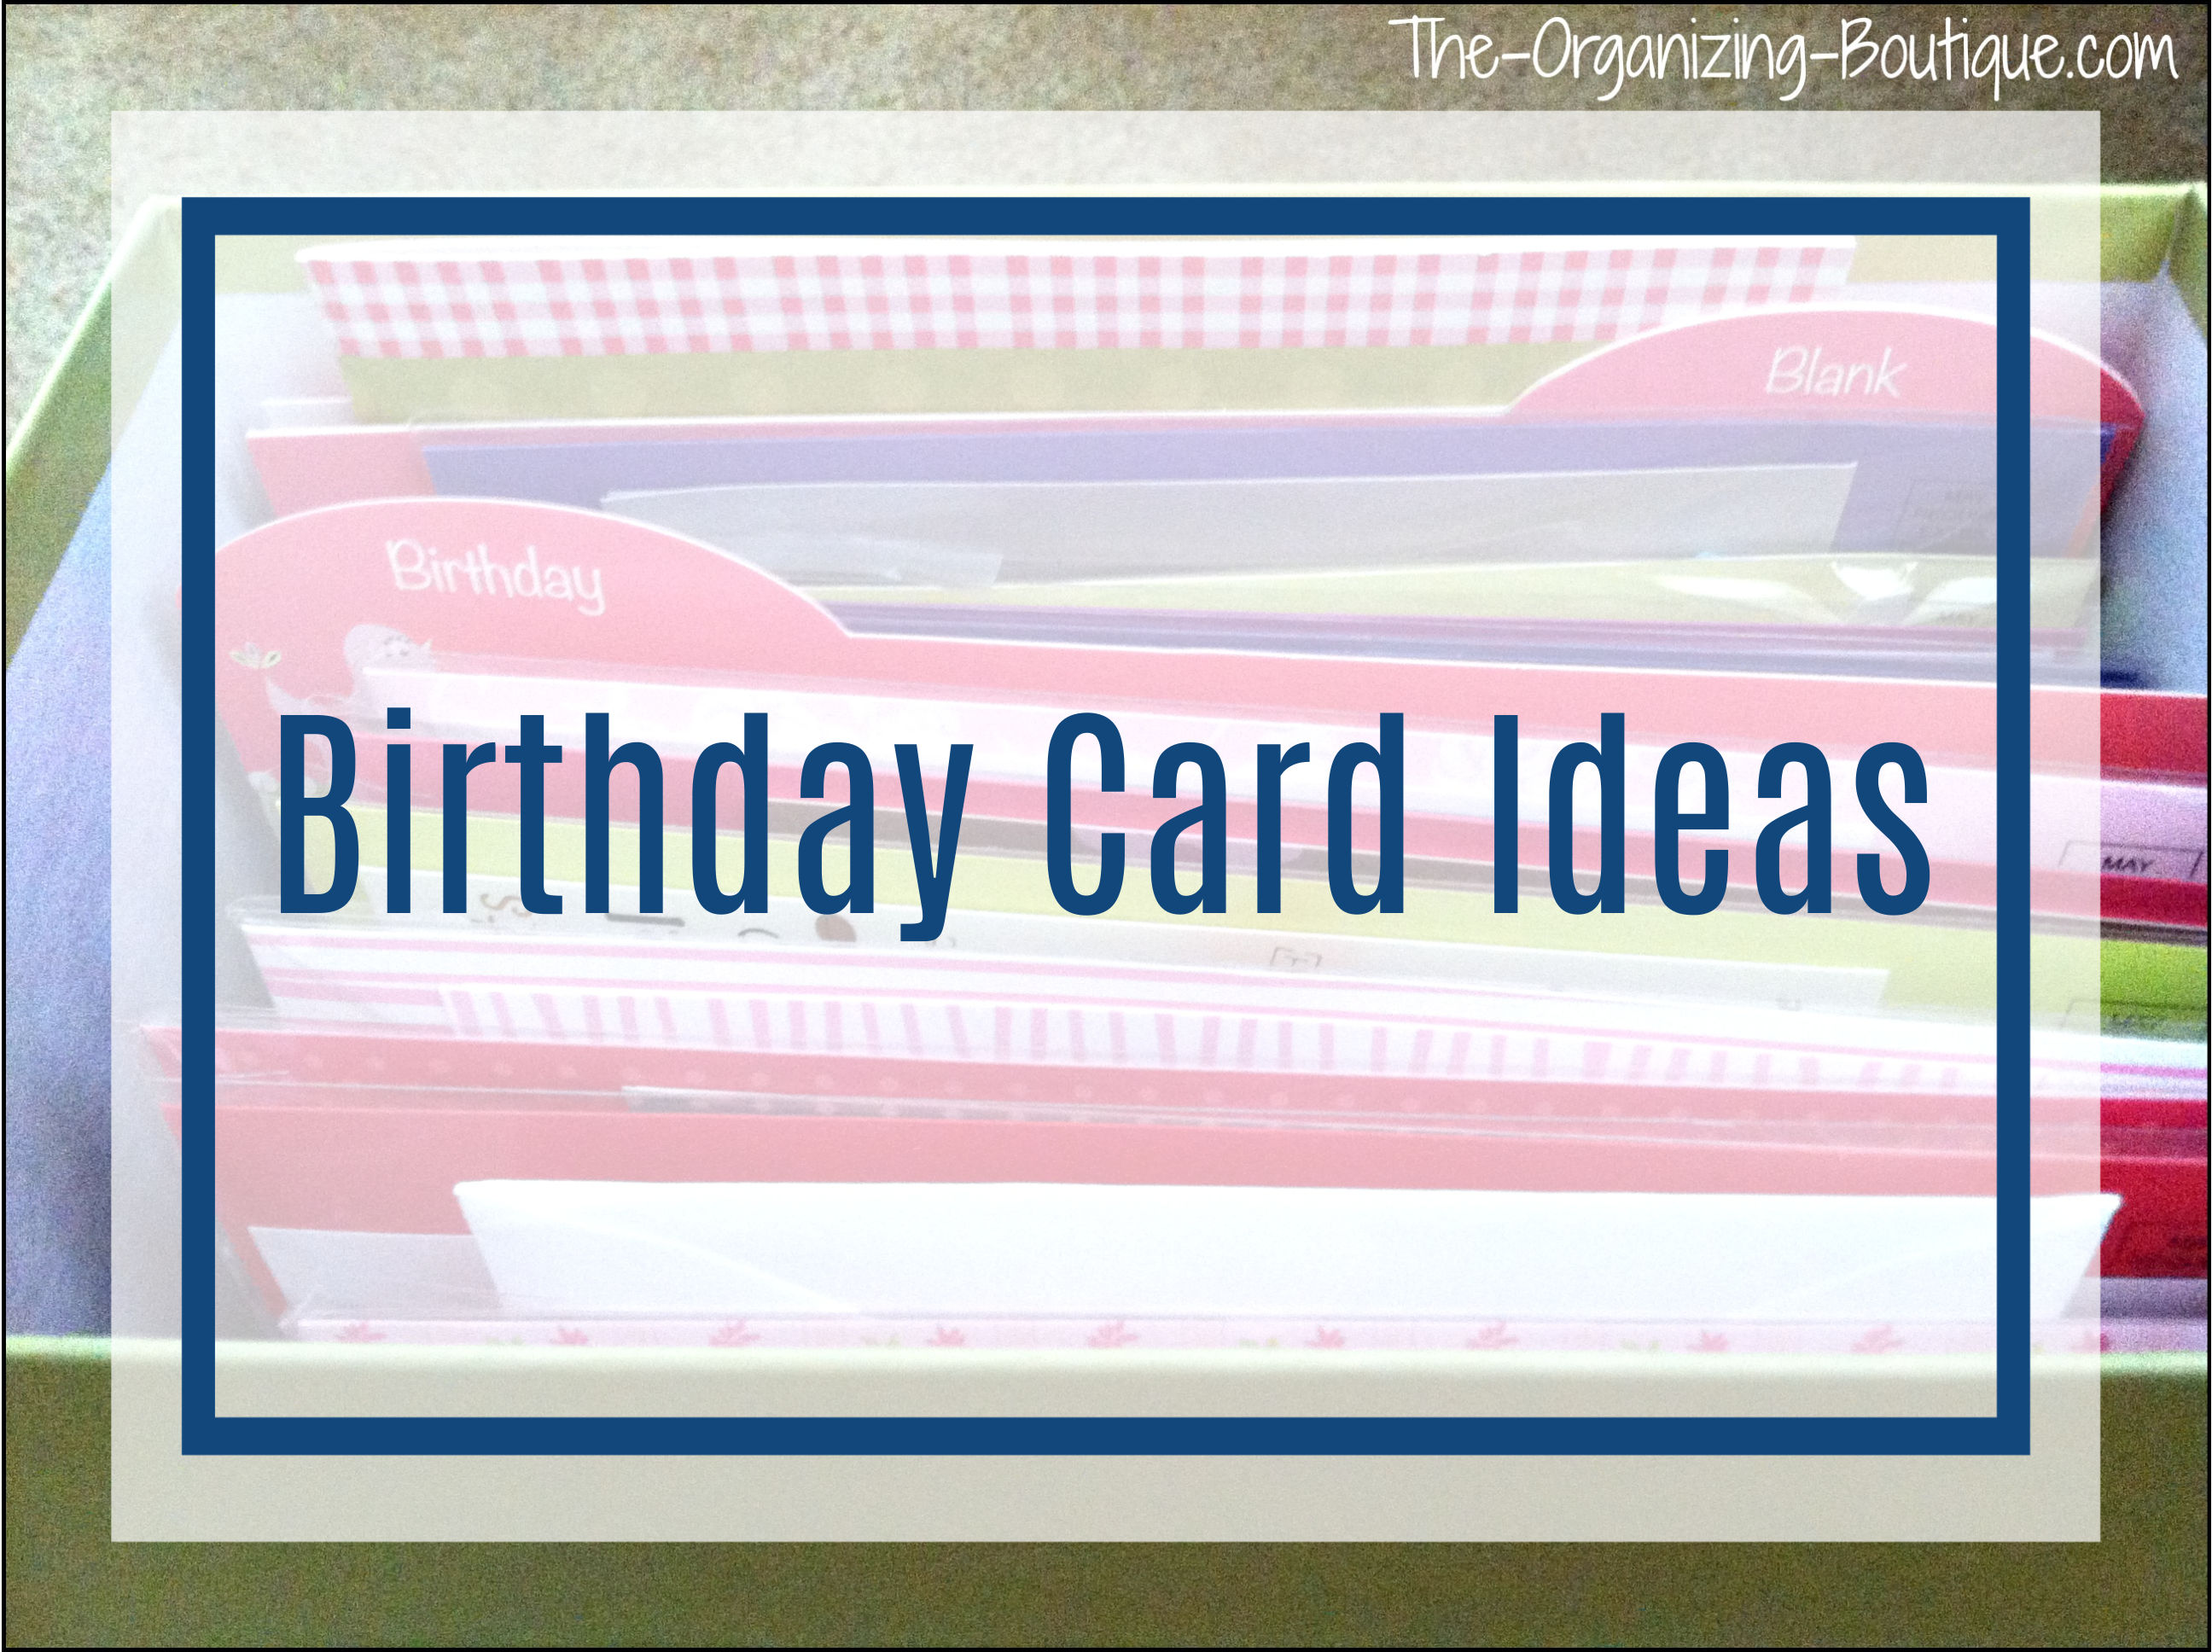 Birthday Card Ideas title